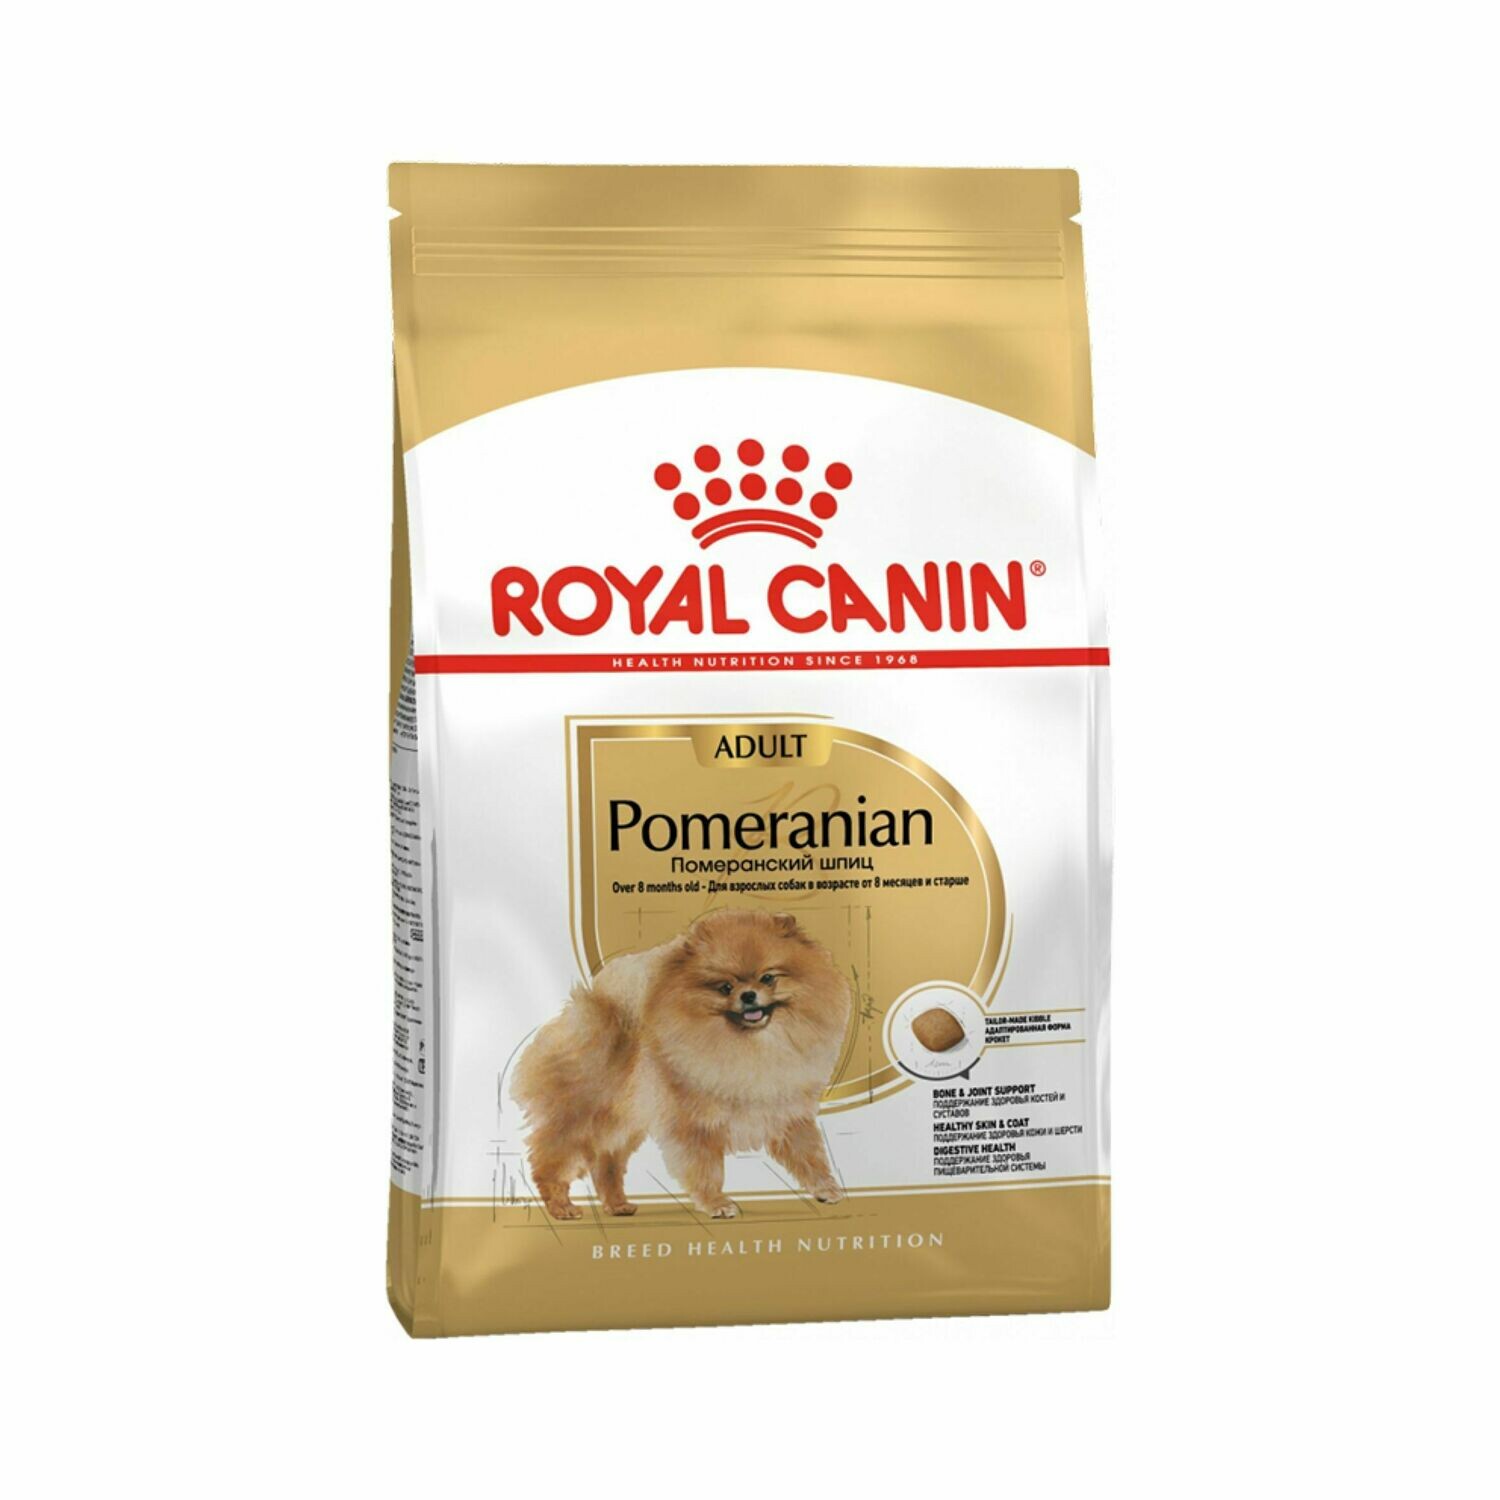 Royal CANIN Pomeranian Adult